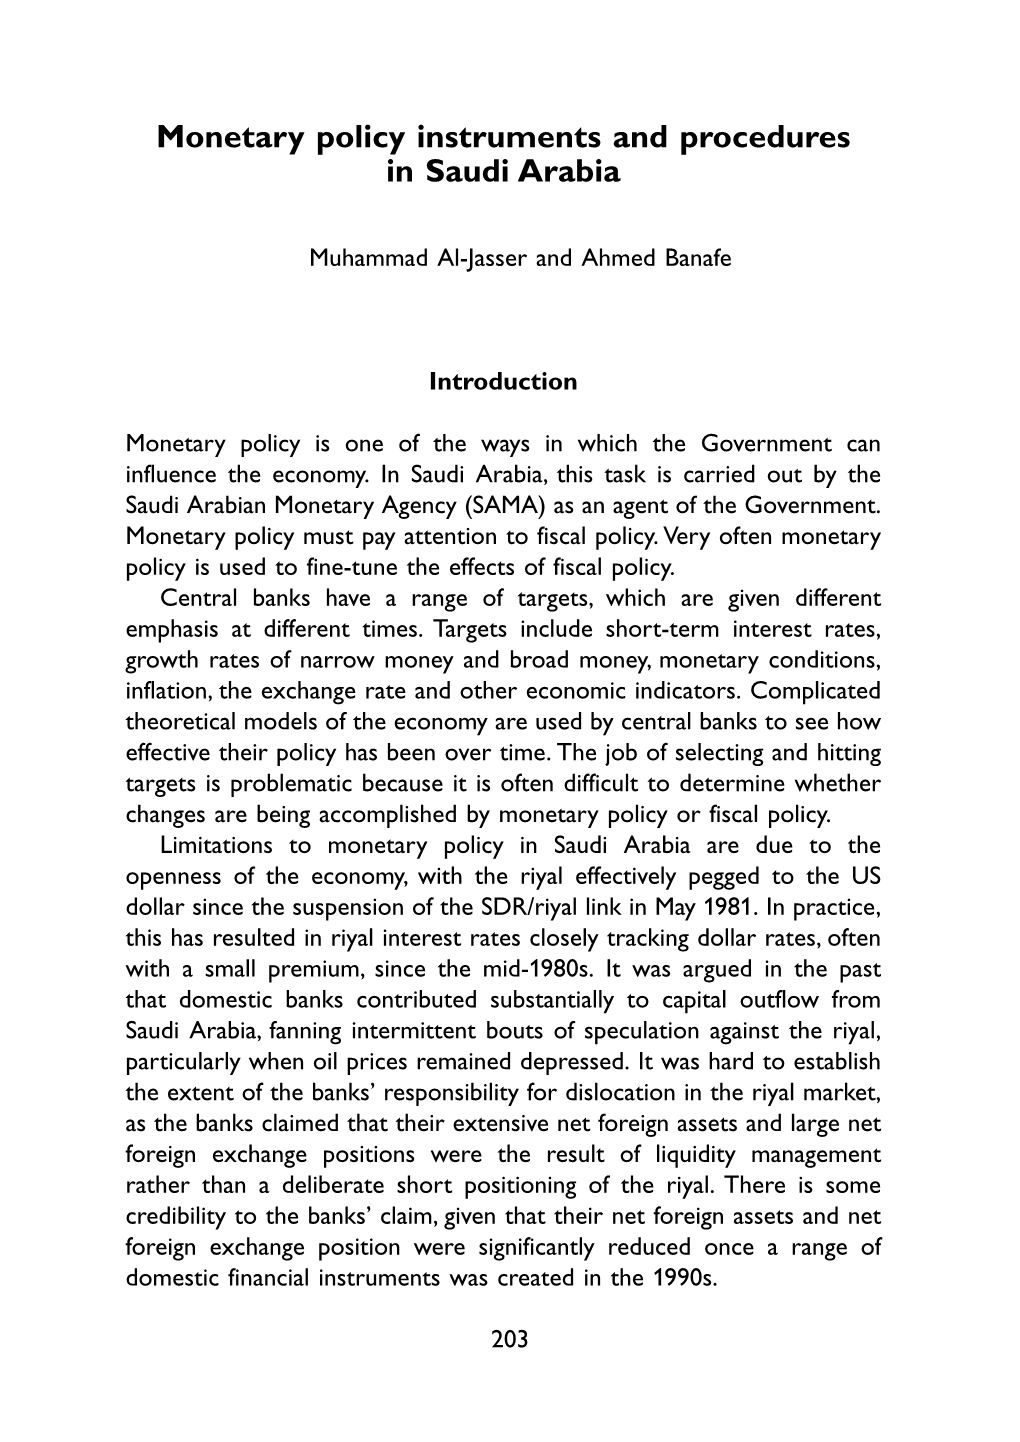 Monetary Policy Operating Procedures in Saudi Arabia